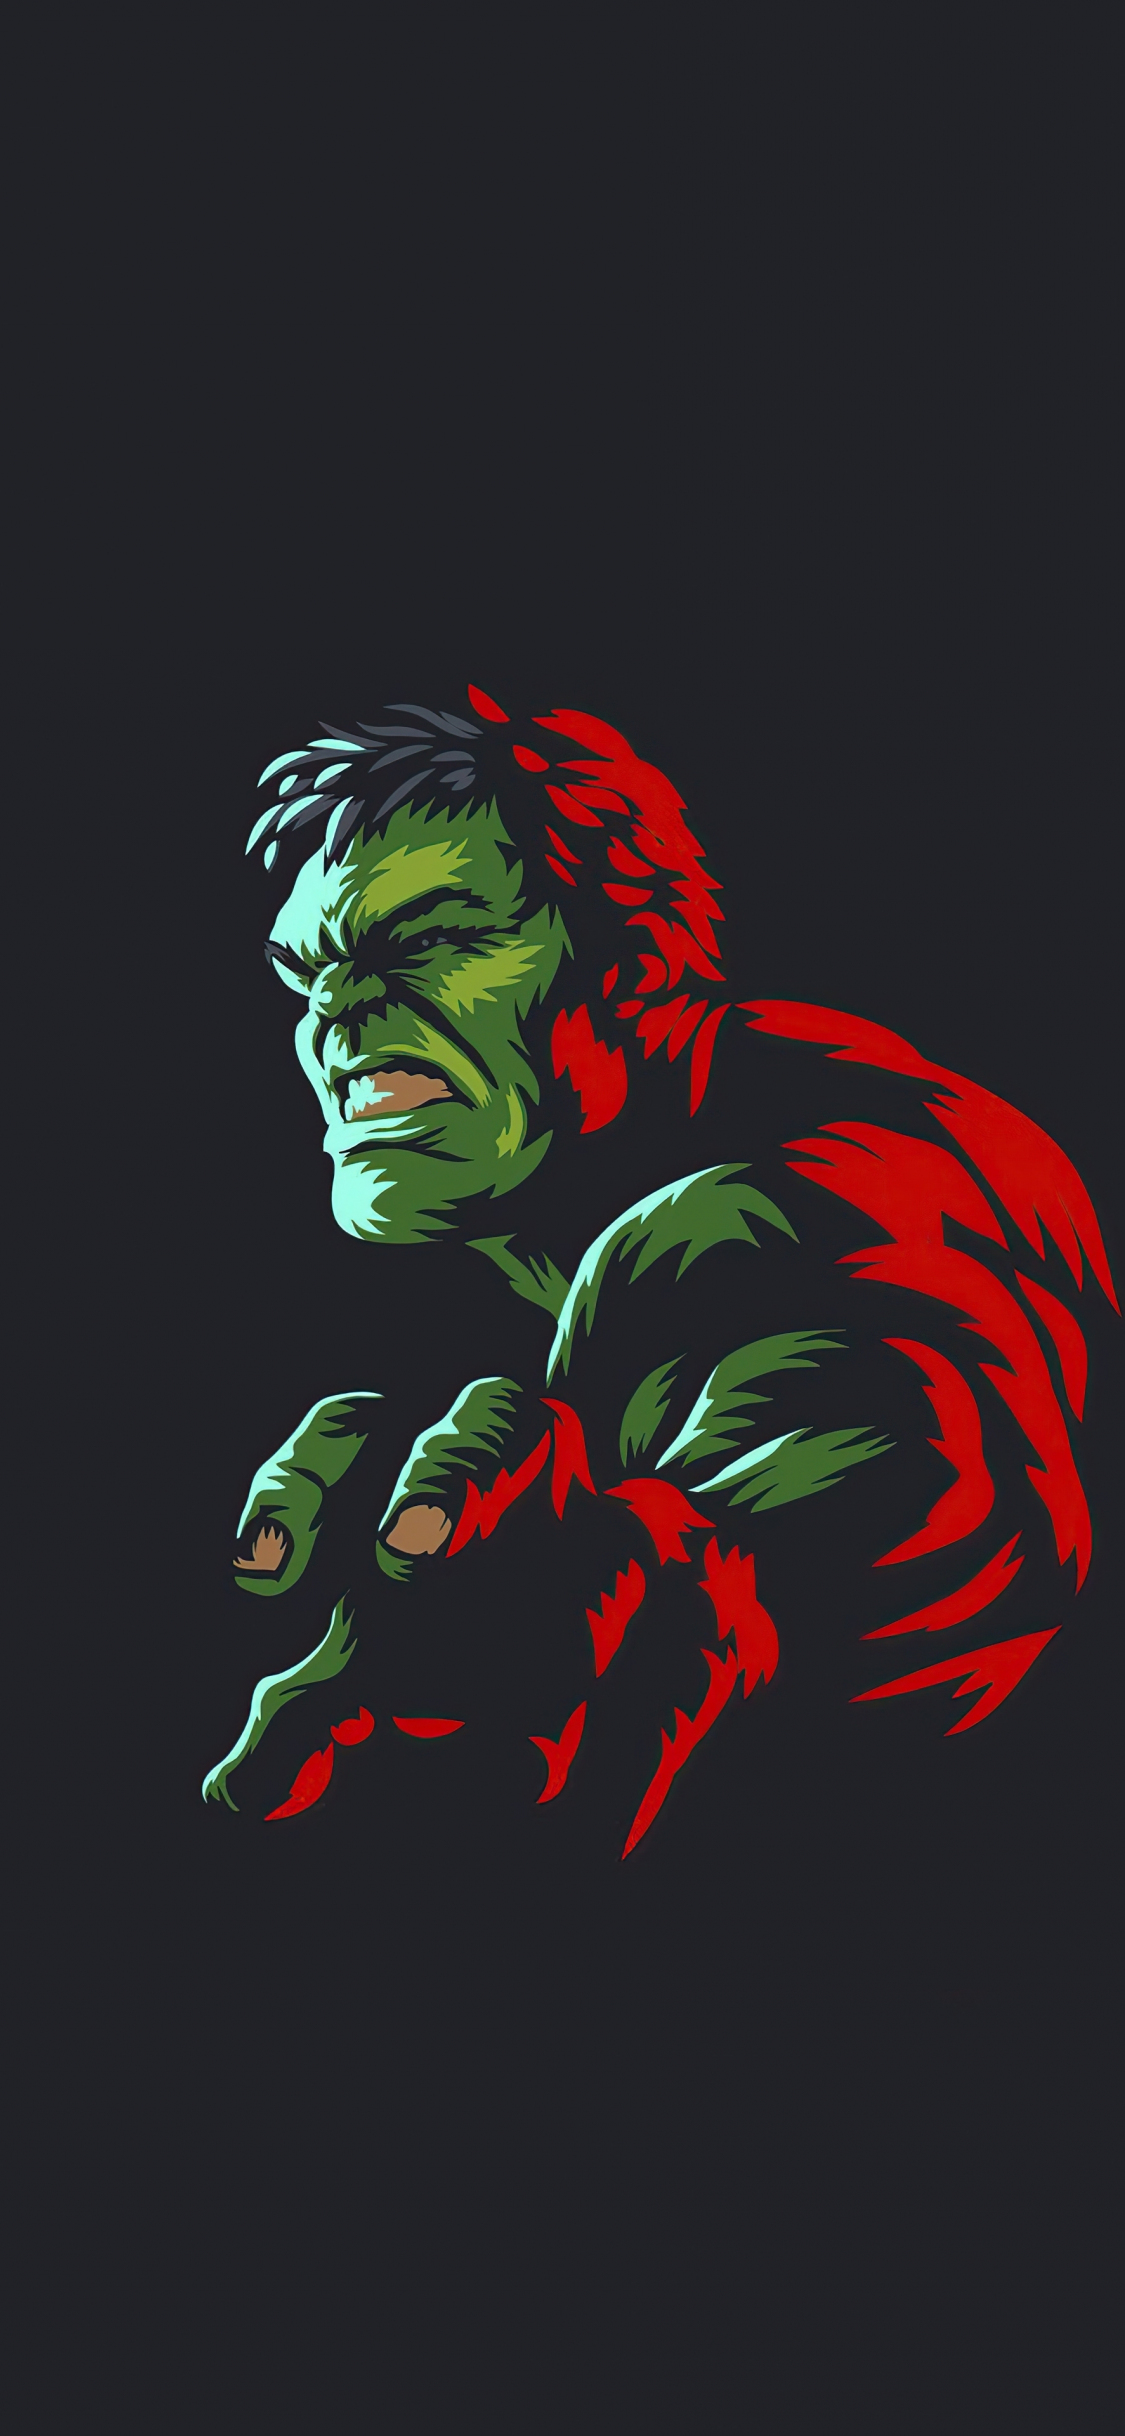 Download hulk, minimal art, marvel hero 1125x2436 wallpaper, iphone x, 1125x2436 HD image, background, 26114